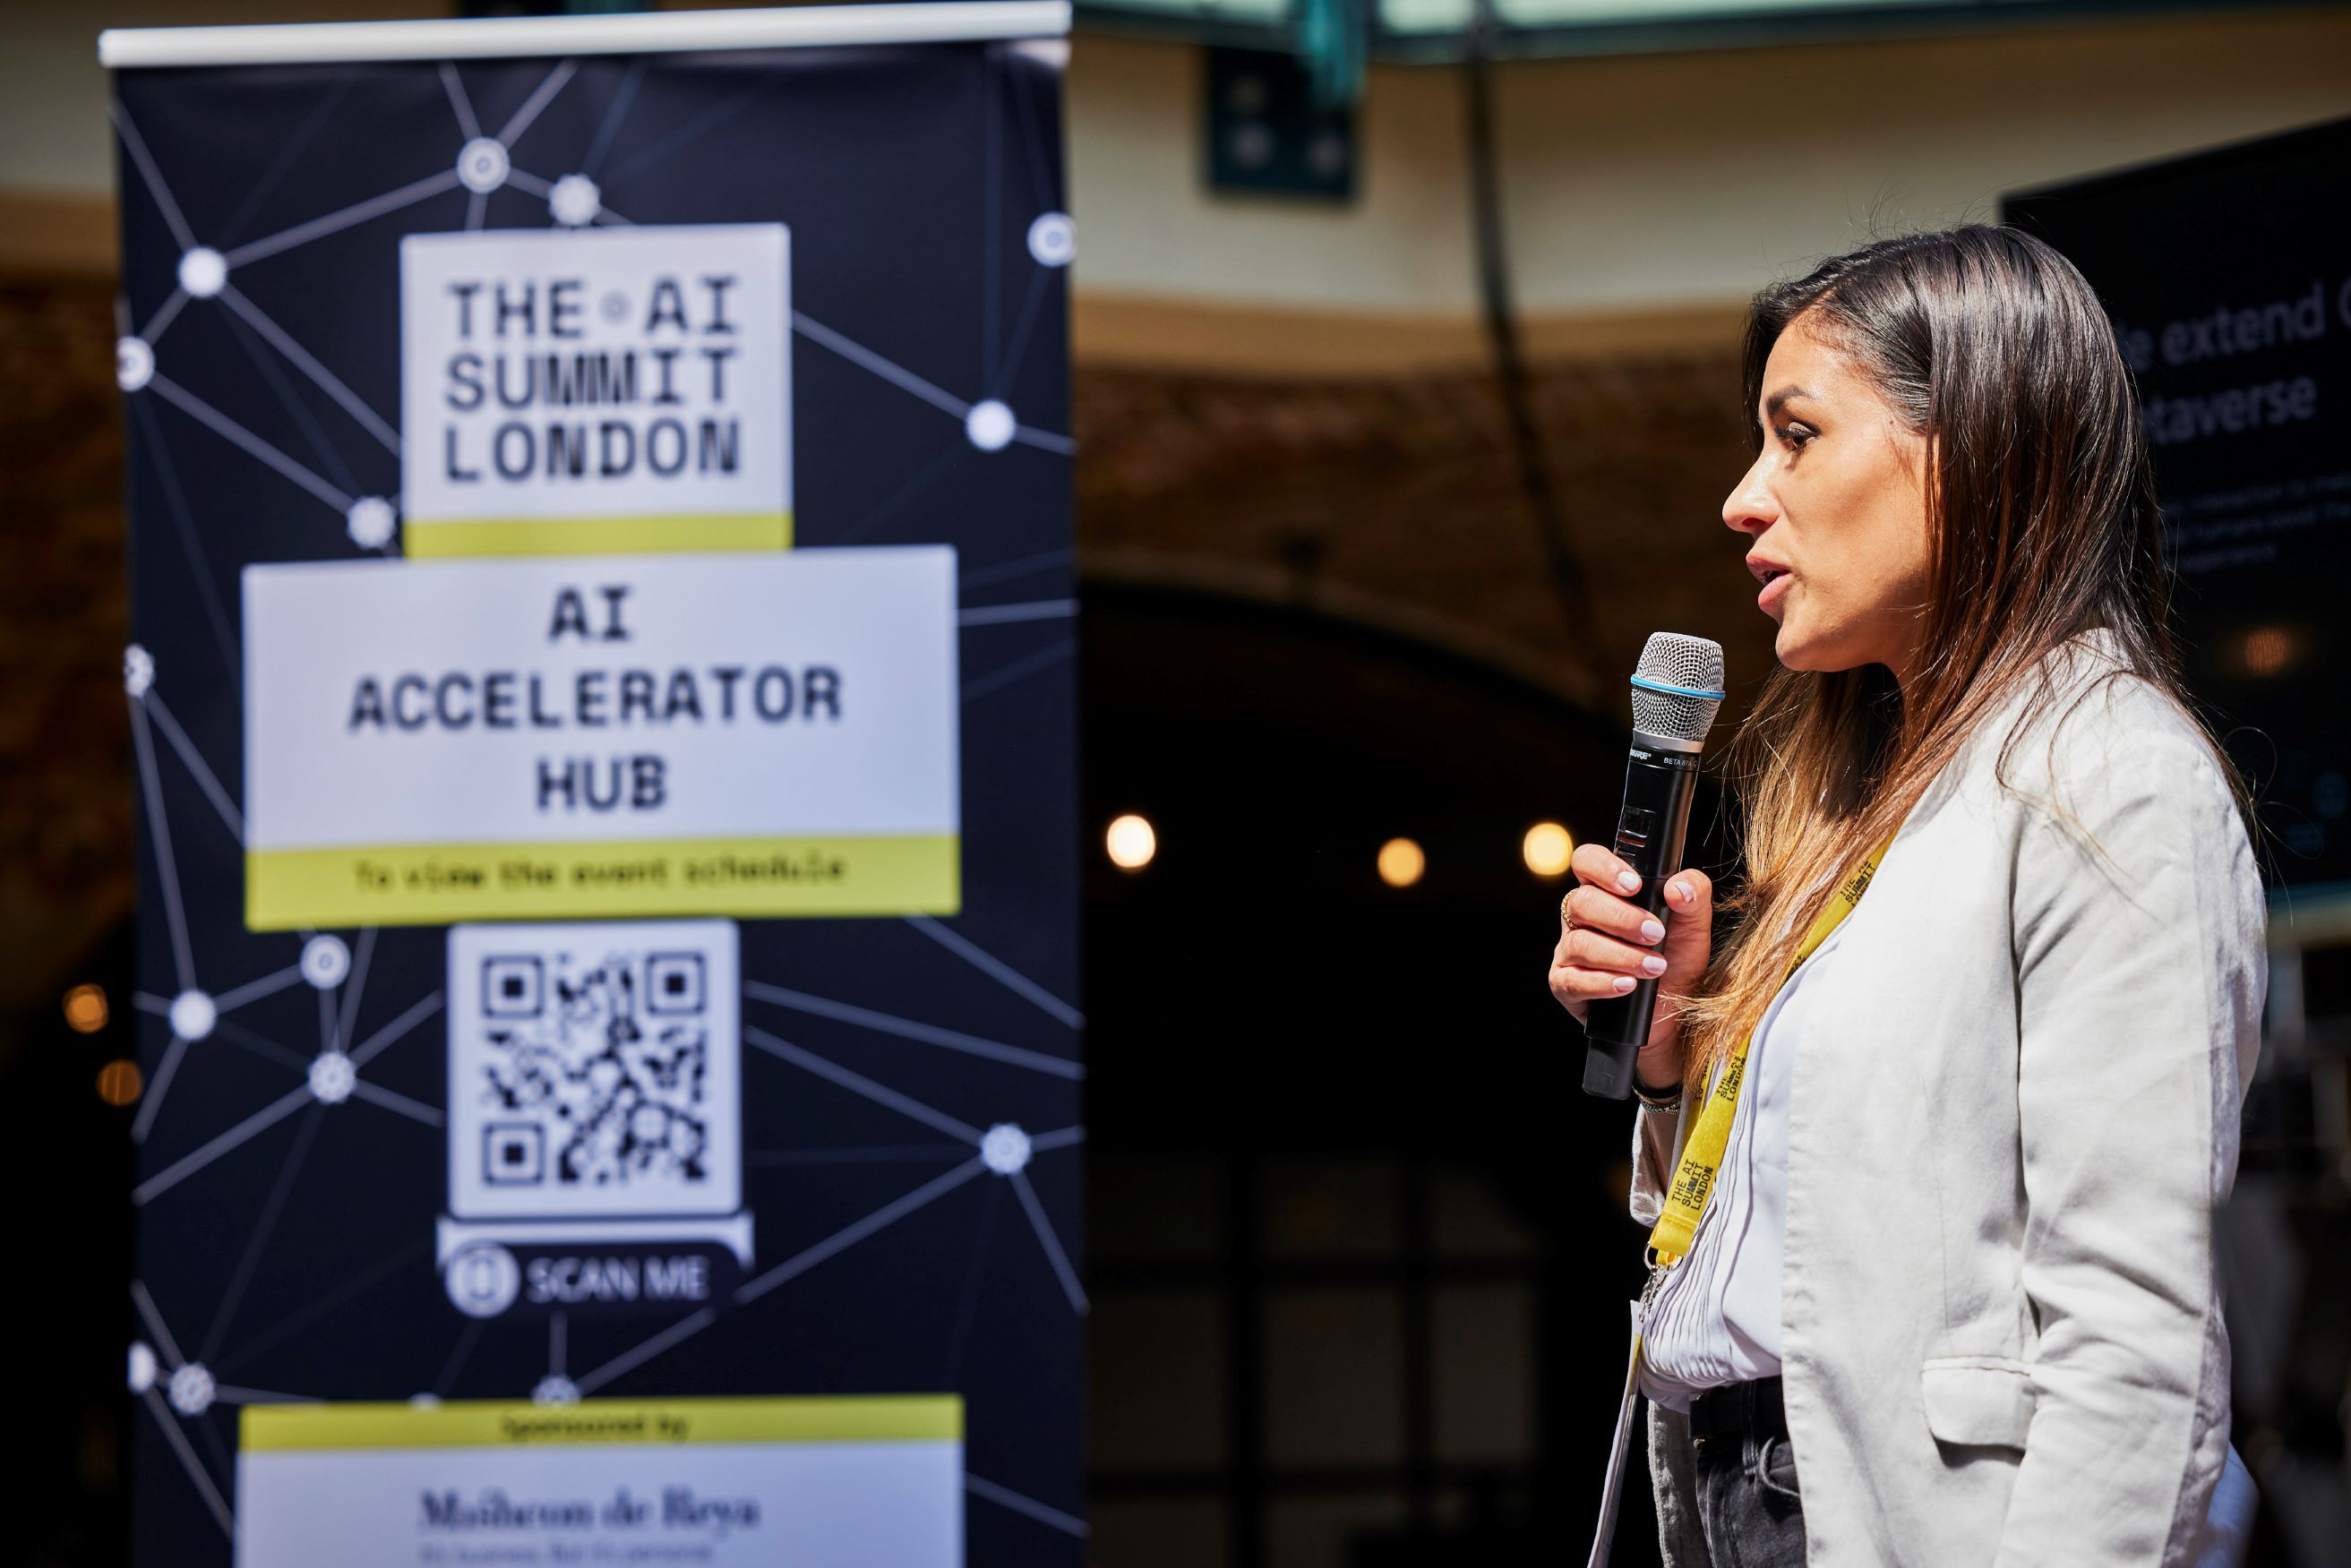 AI Accelerator Hub at The AI Summit London (Conference & Expo)